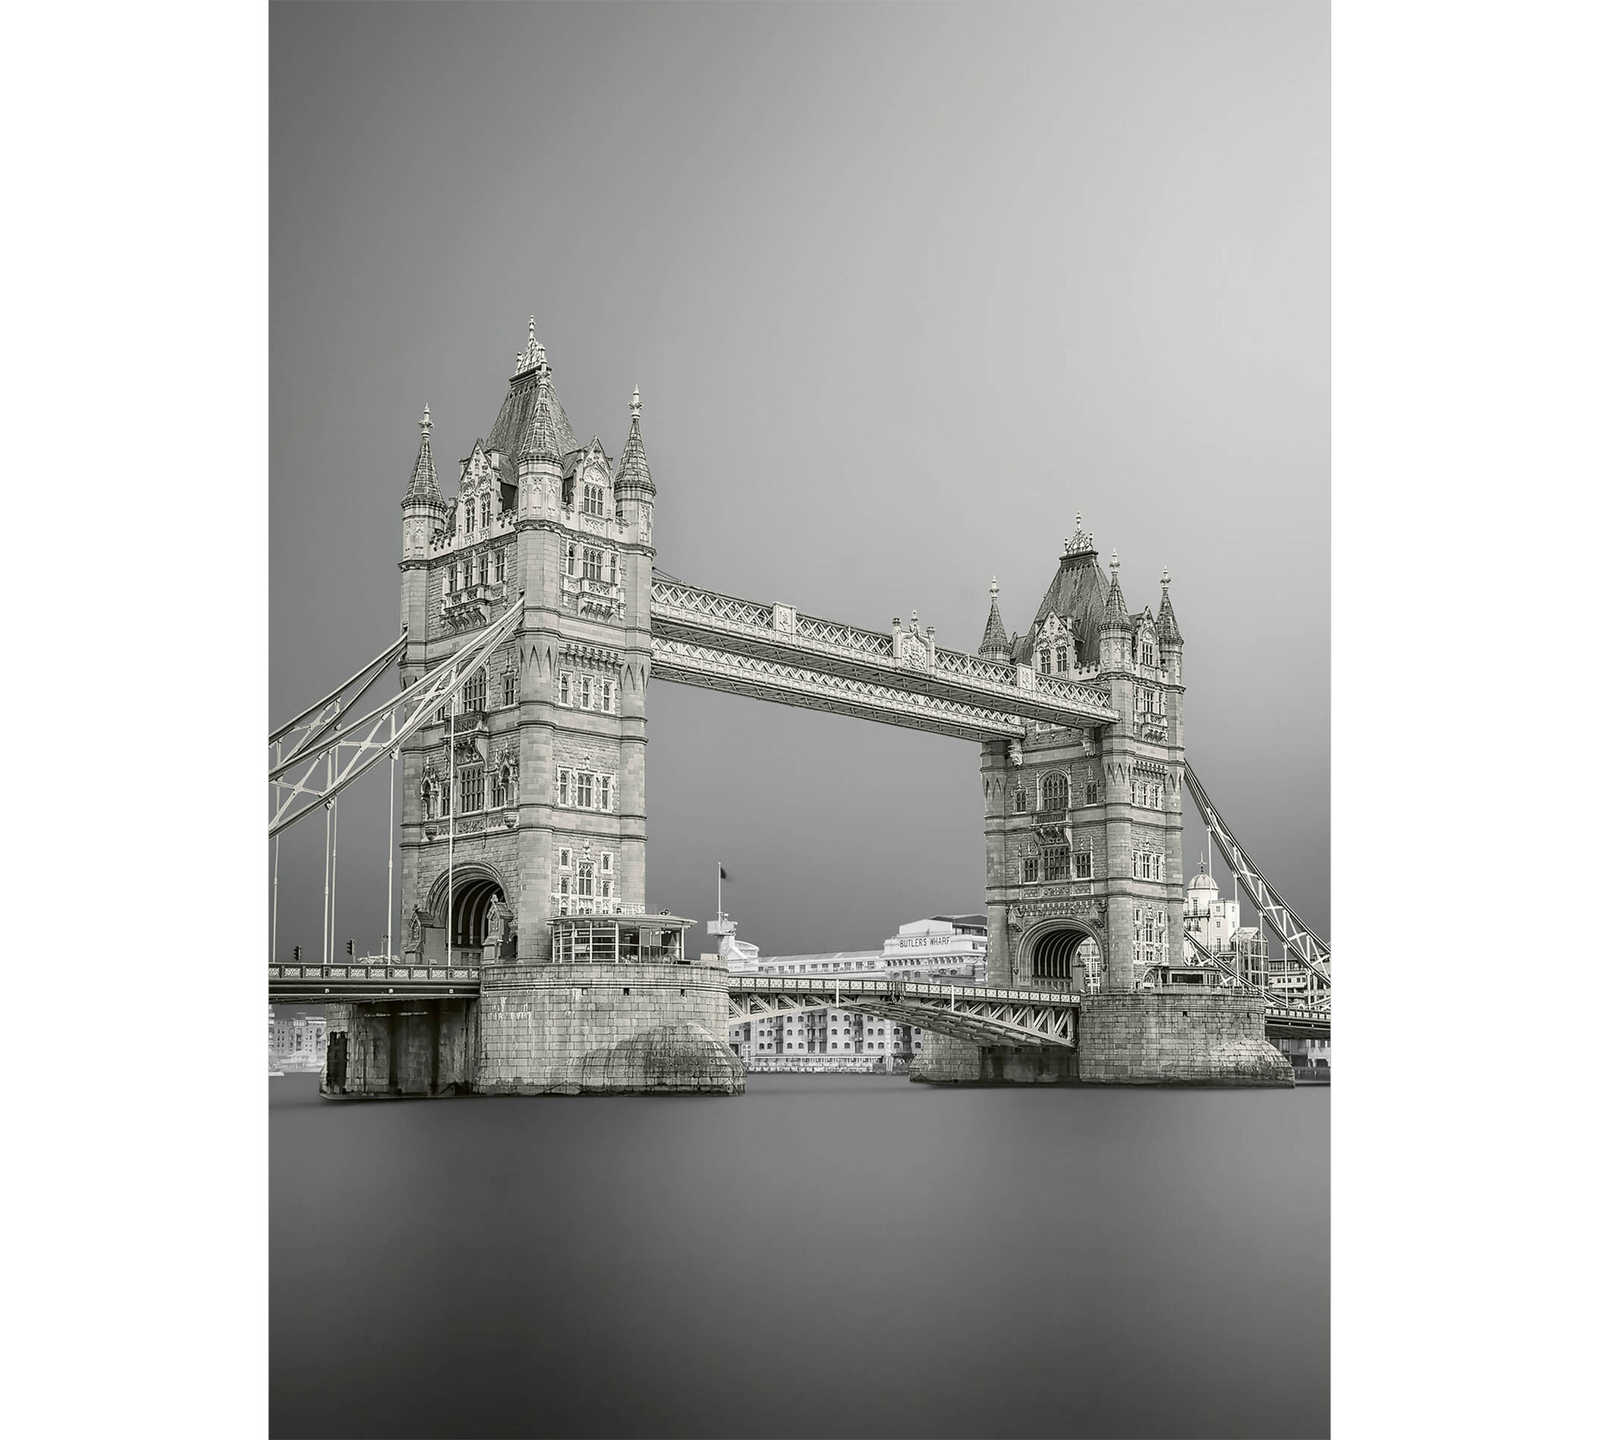         Fototapete London Tower Bridge – Grau, Weiß, Schwarz
    